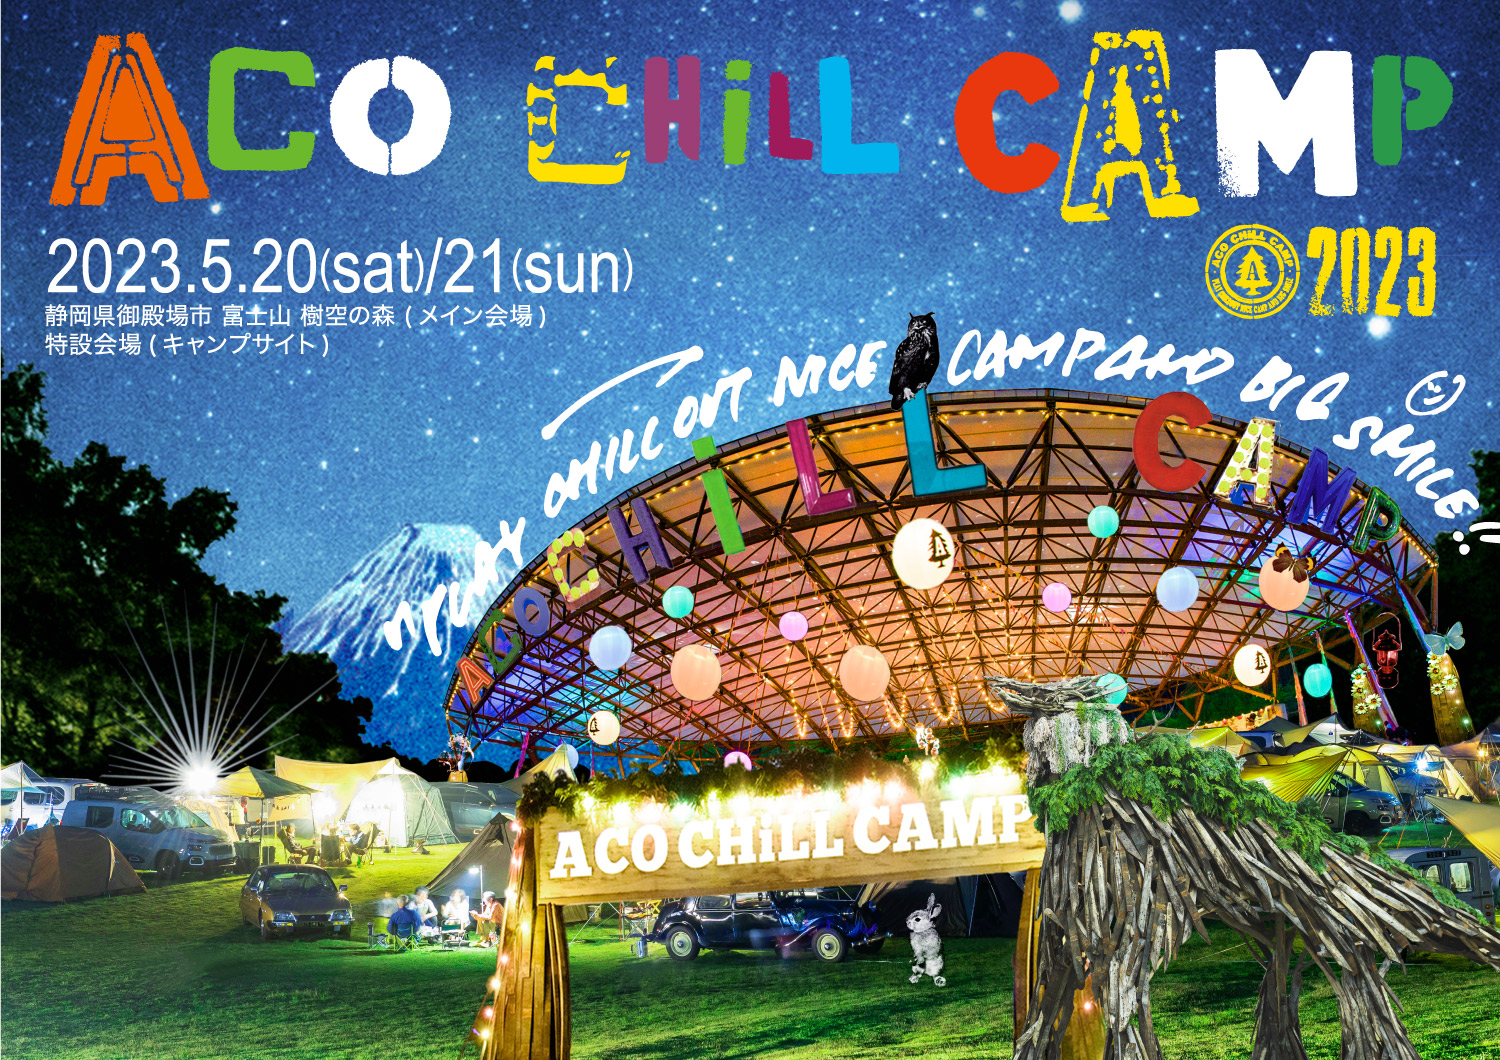 ACO CHiLL CAMP 2023出店のお知らせ